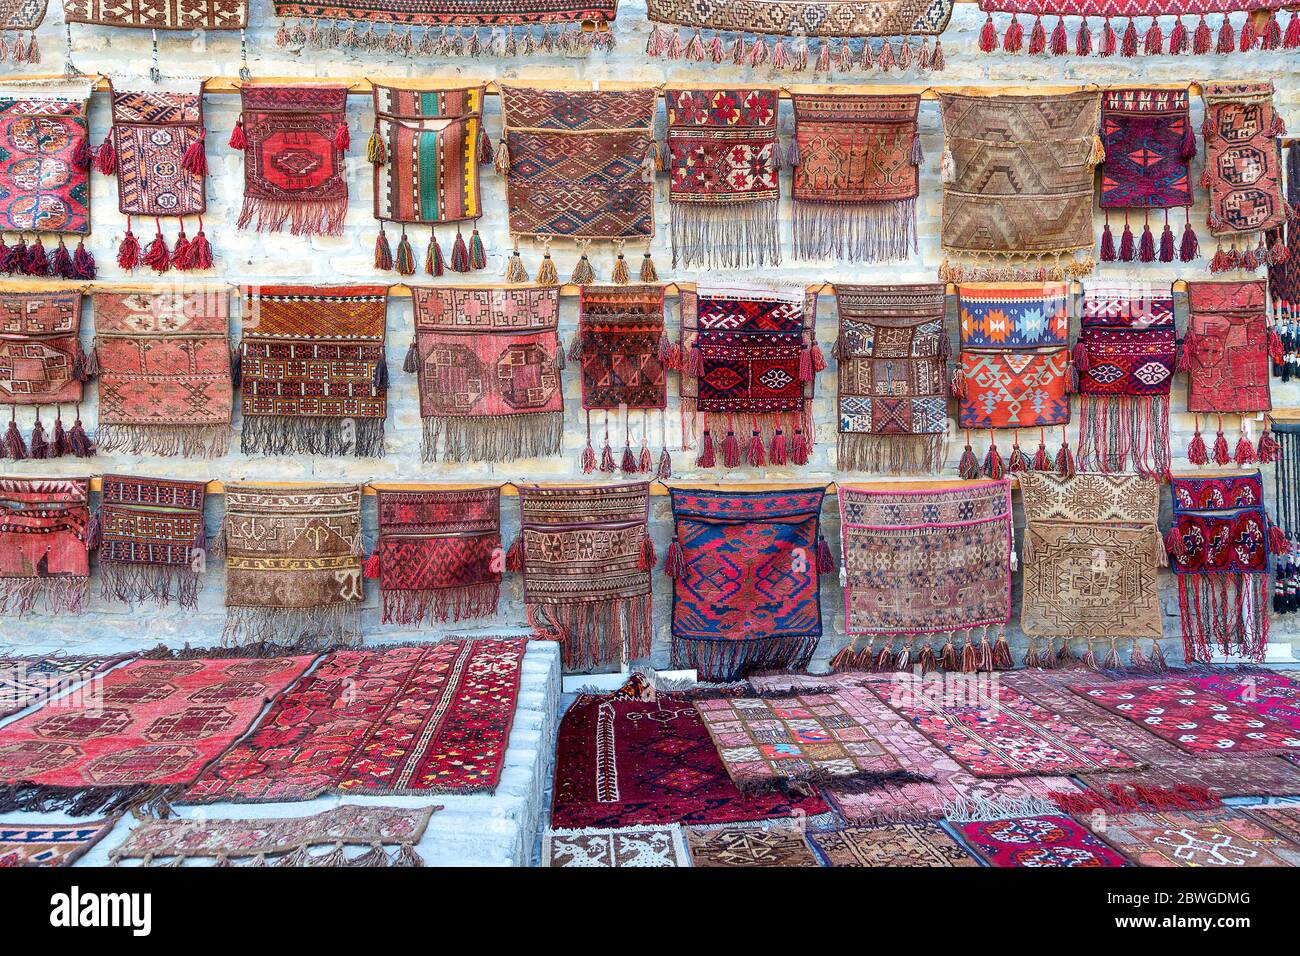 Tappeti orientali e tappeti colorati fatti a mano, Bukhara, Uzbekistan Foto  stock - Alamy